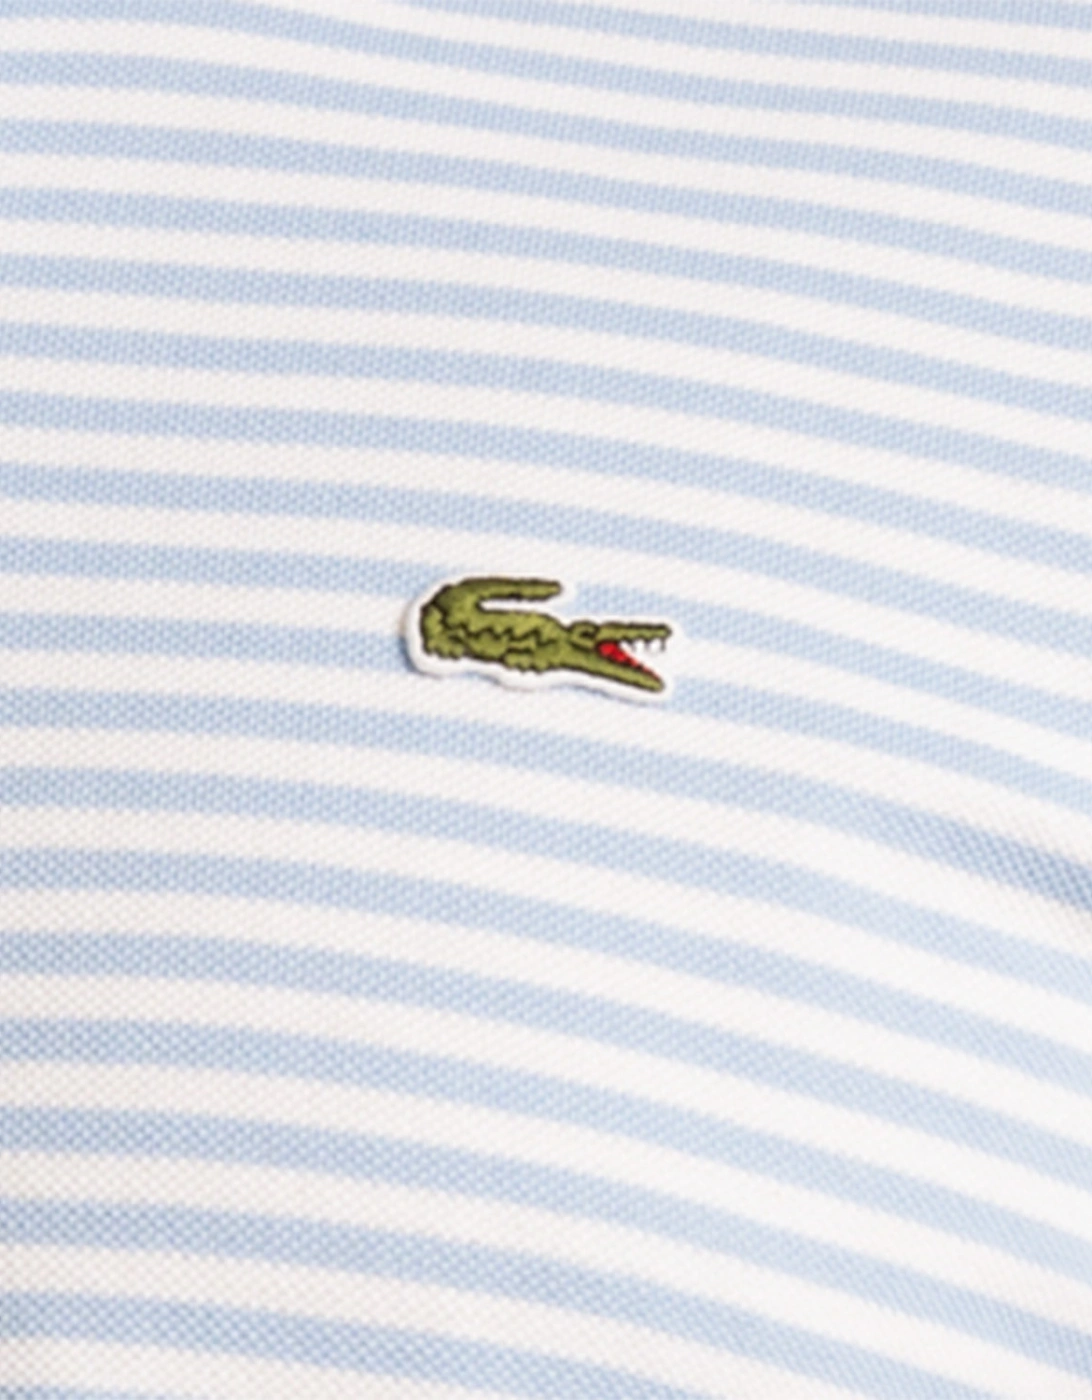 Mens Striped Polo Shirt (White/Blue)